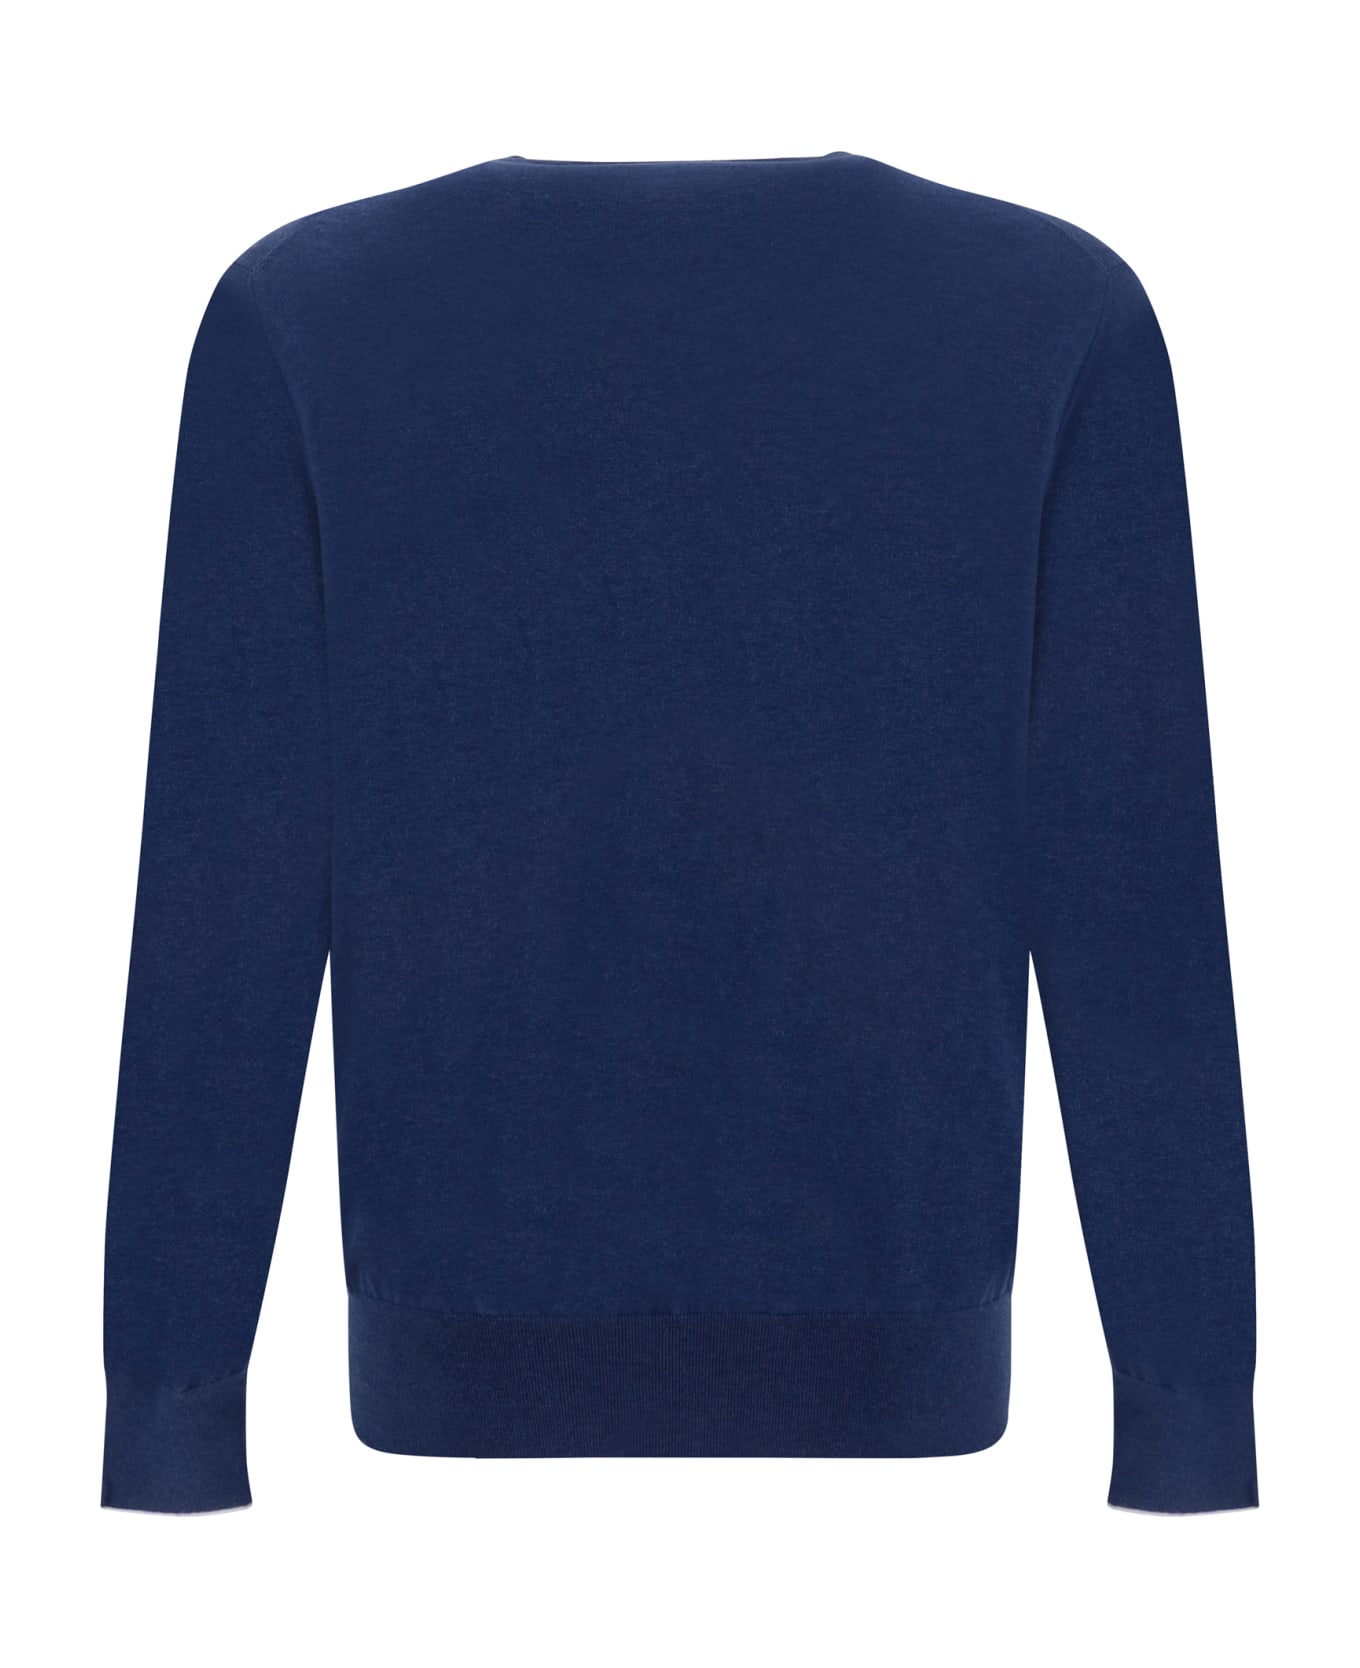 Cruciani Sweater - 41e80014